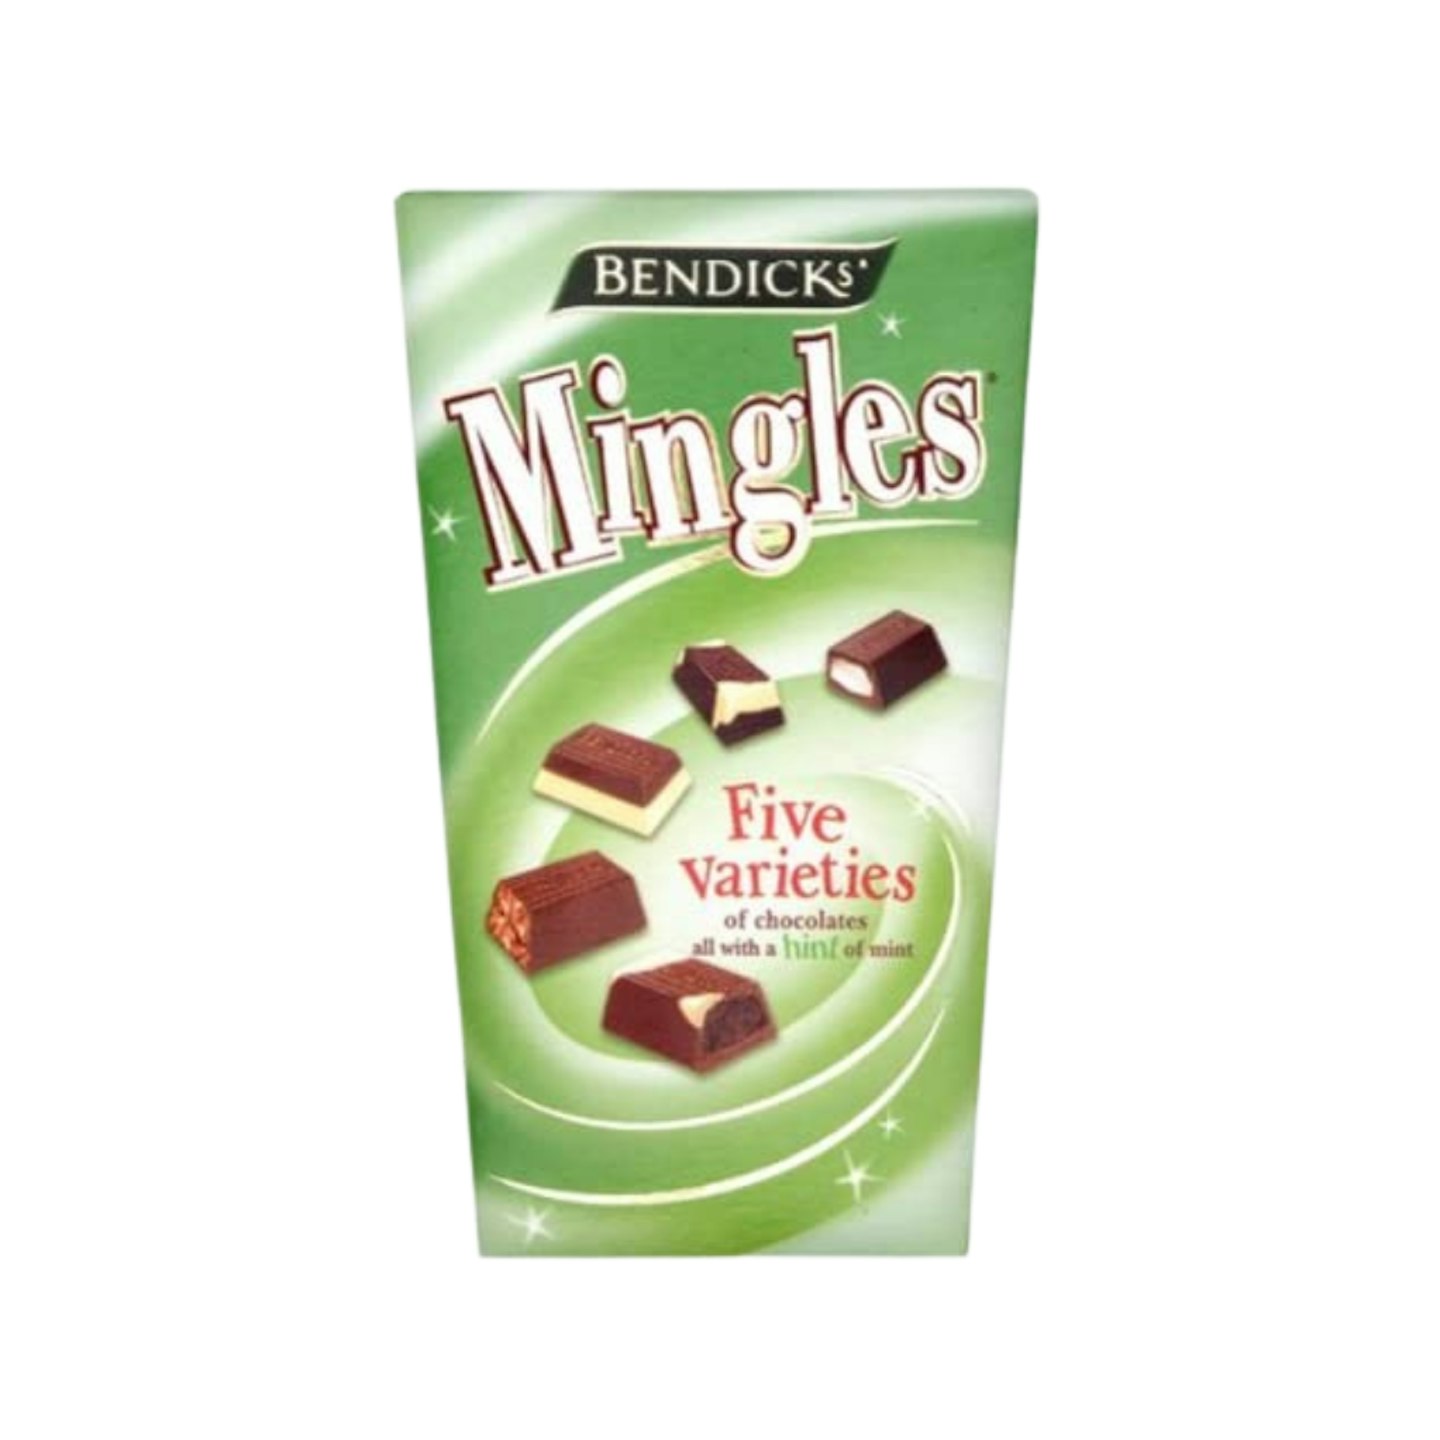 Bendick's Mingles